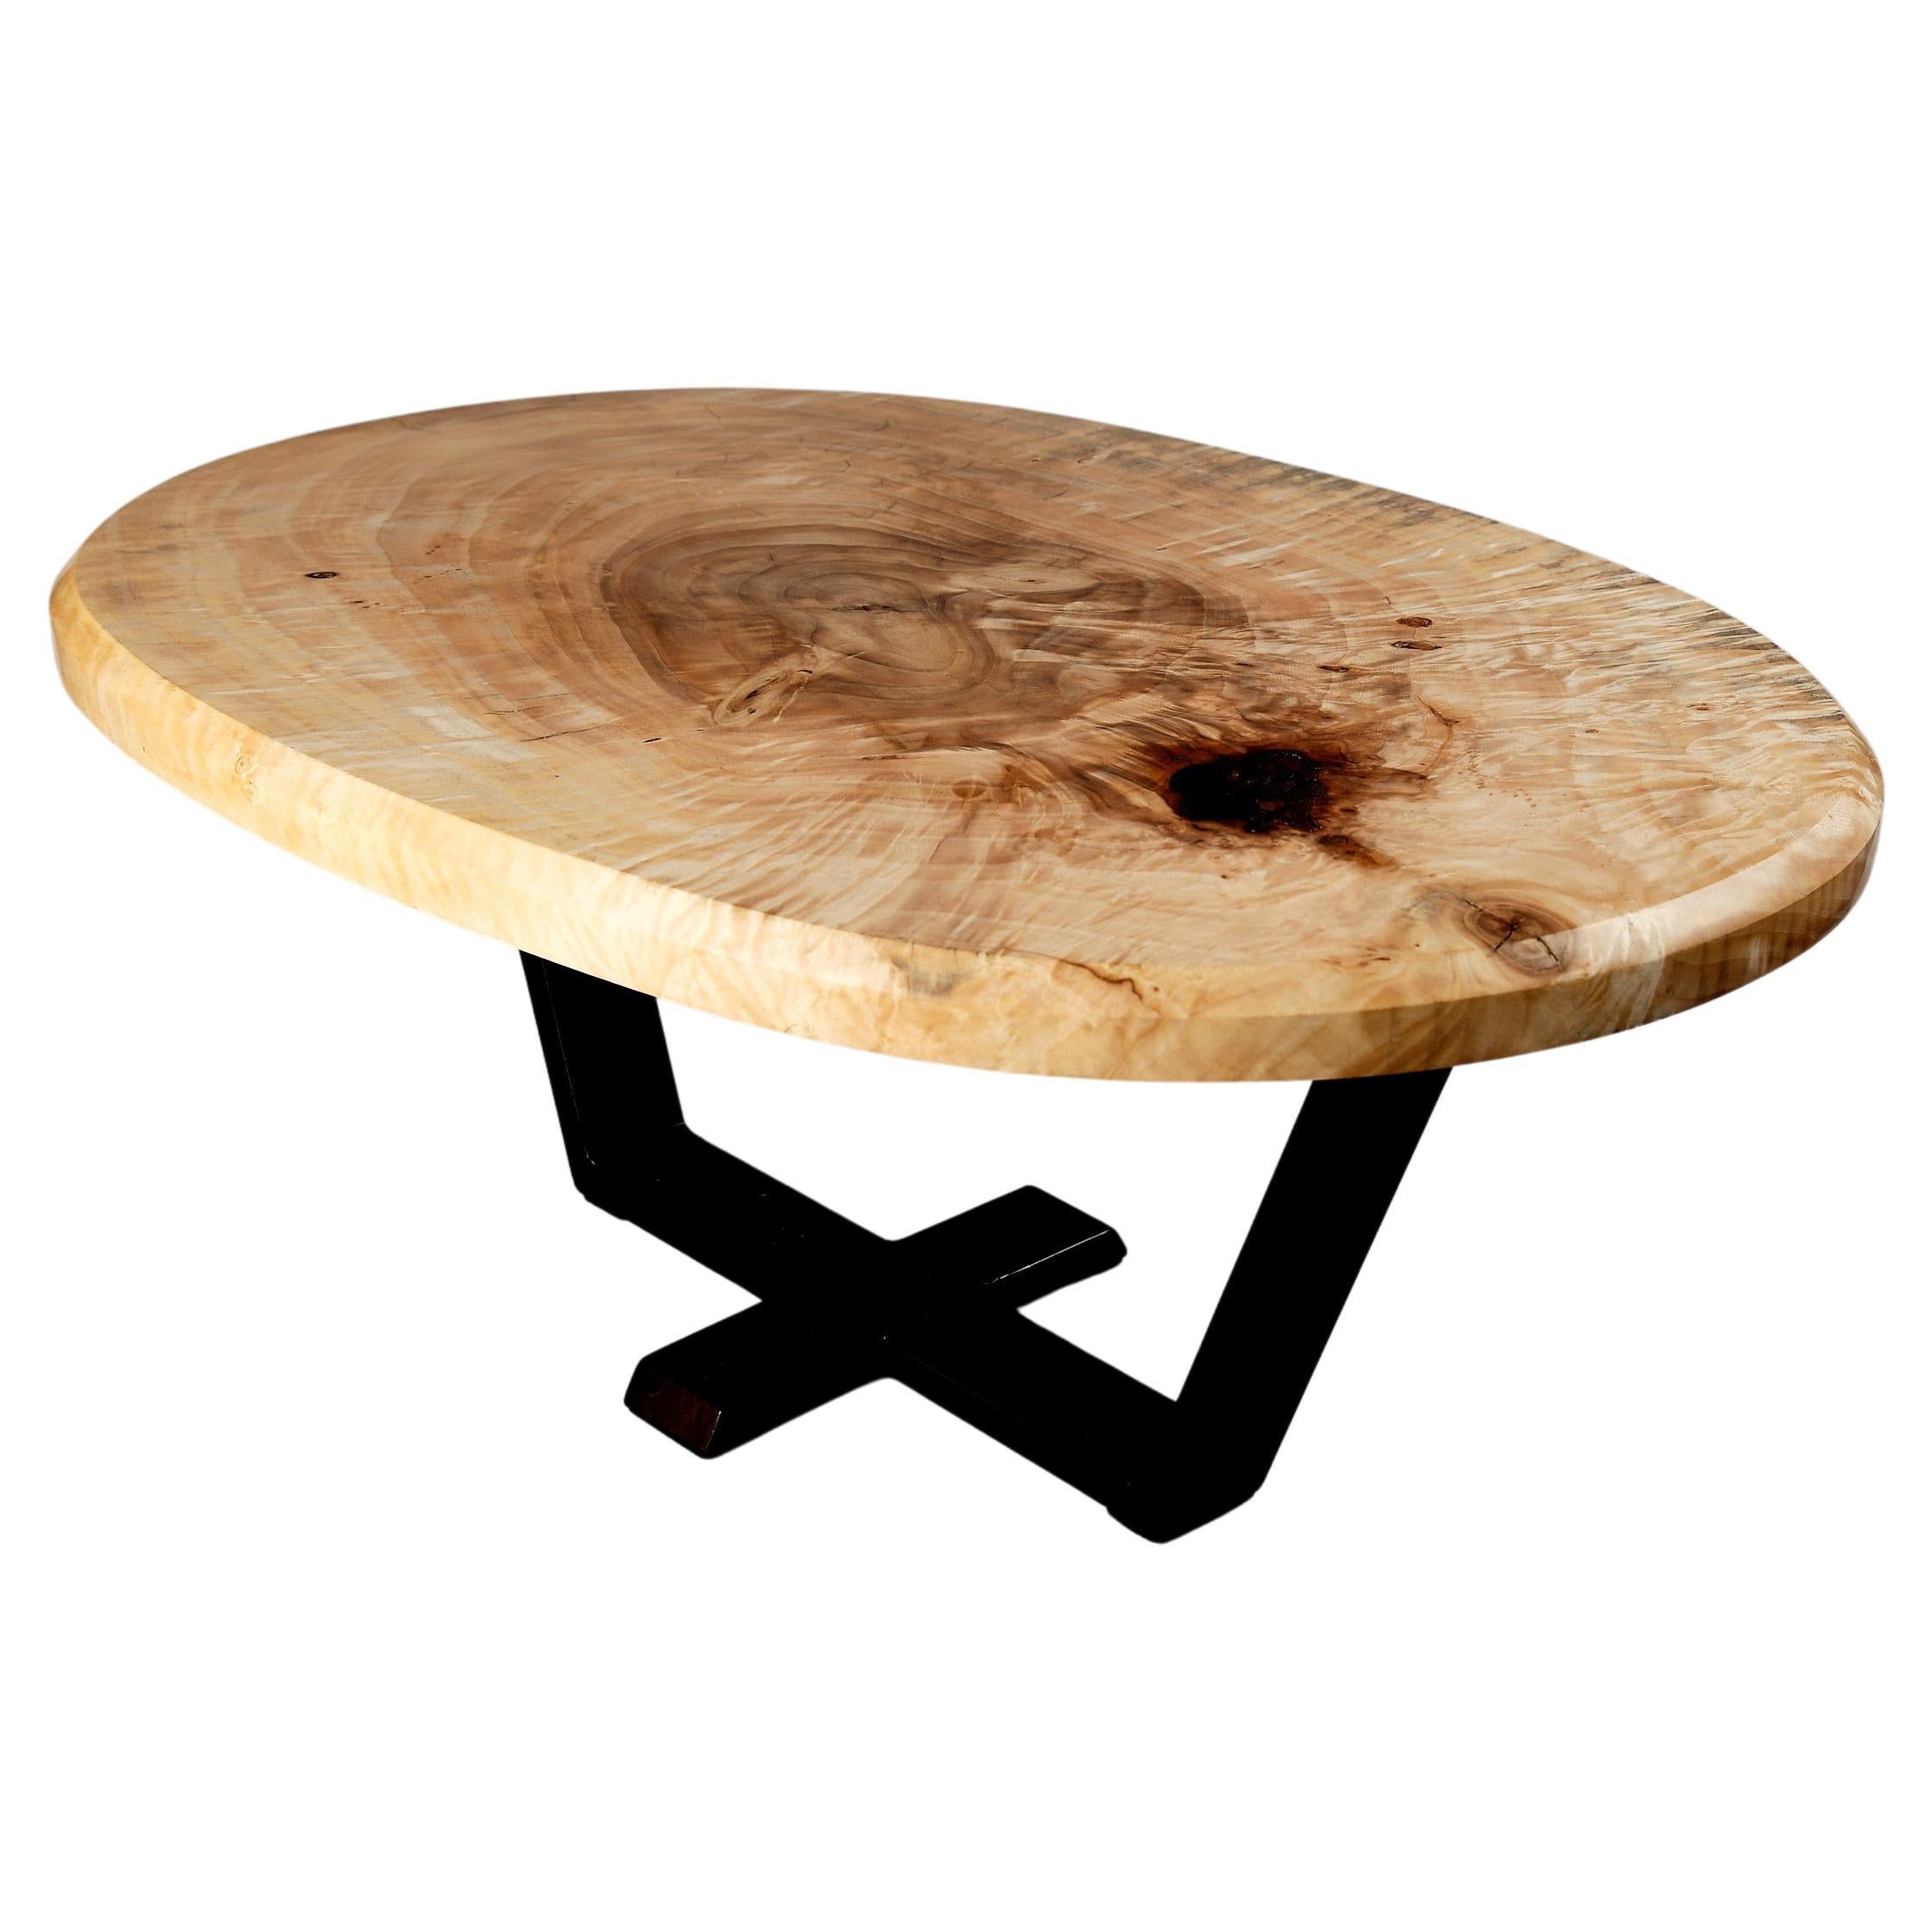 Original Contemporary Design, Burnt Oak with Steel, Unique Side Table, Logniture